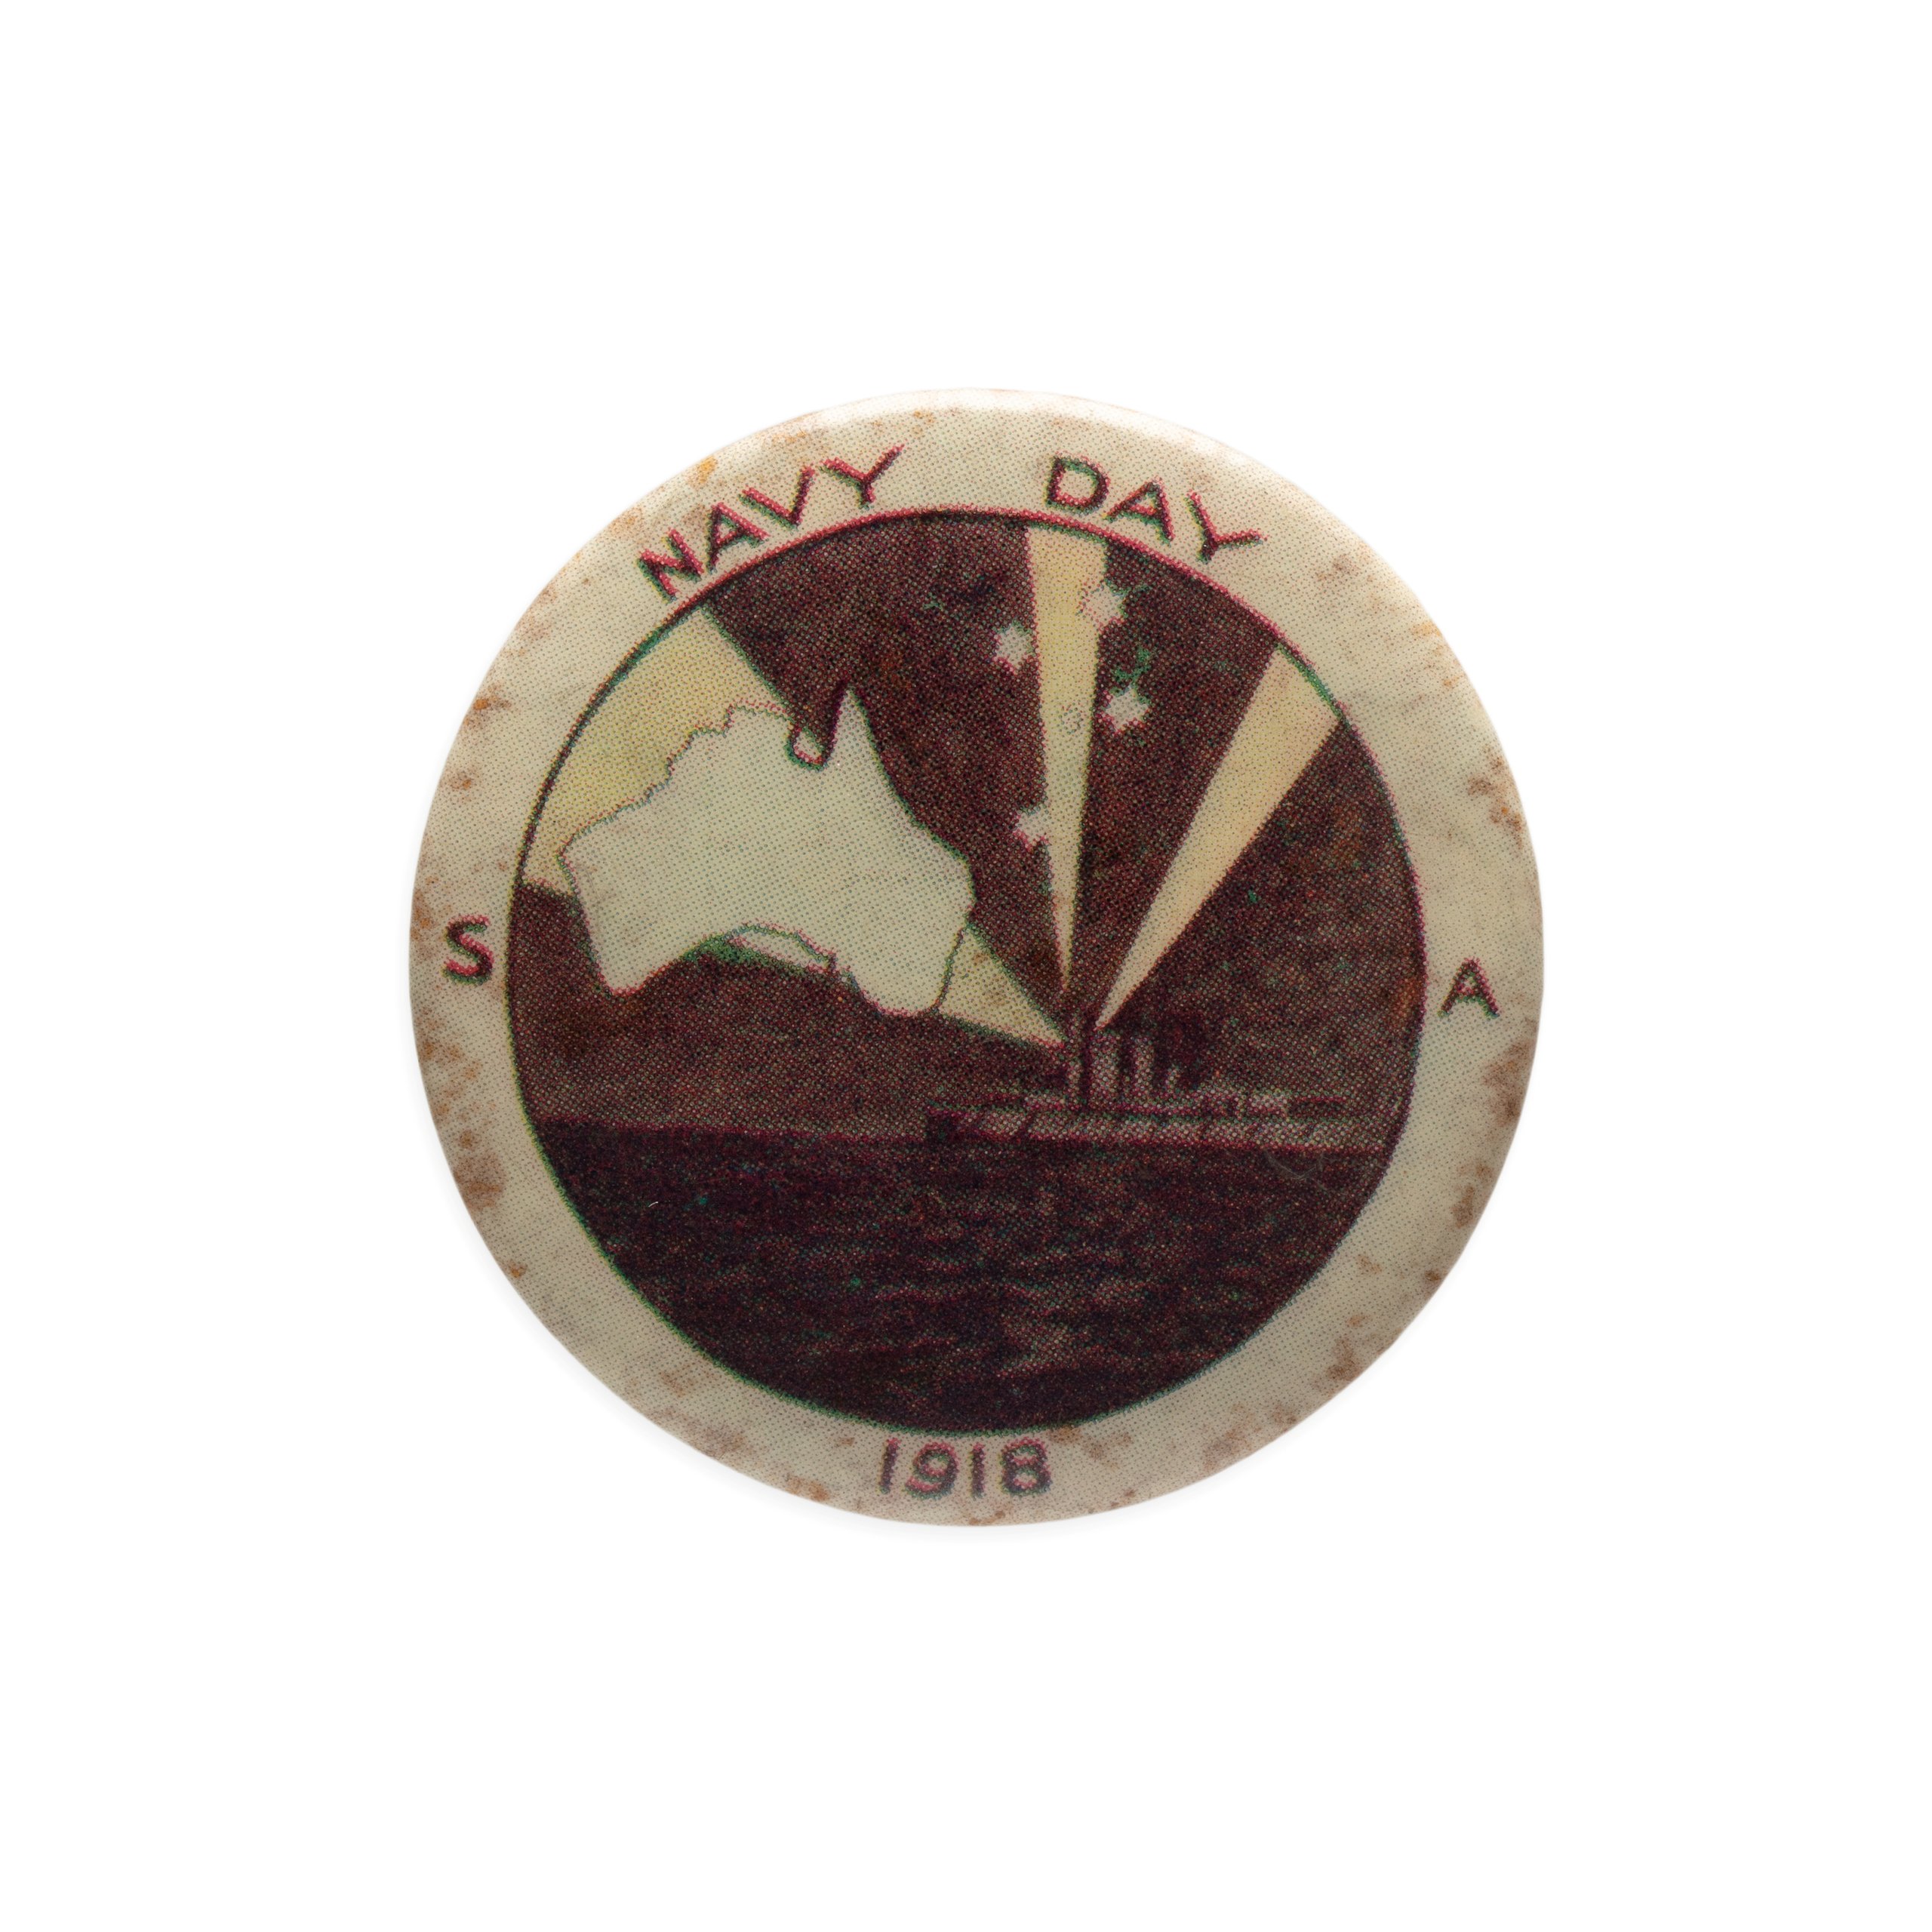 'Navy Day' badge